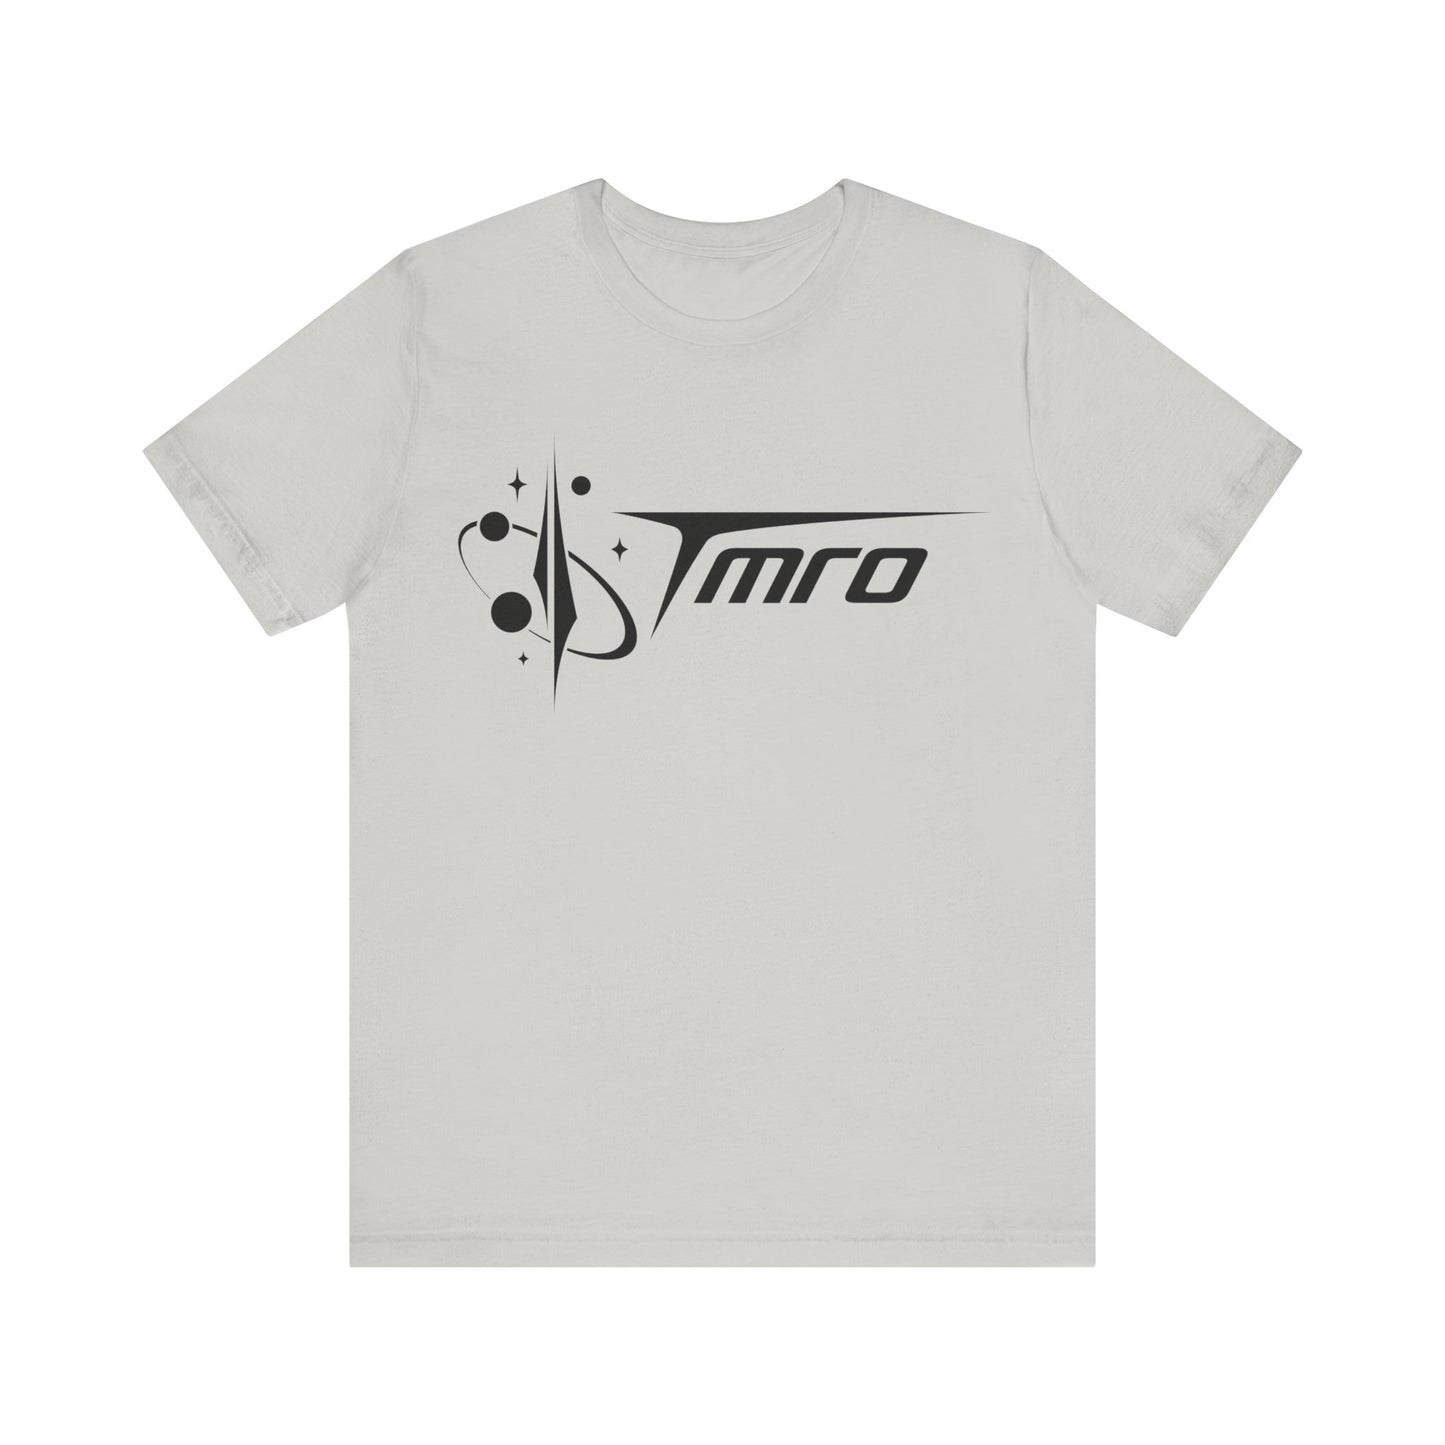 TMRO - Black Logo - T-shirt - US